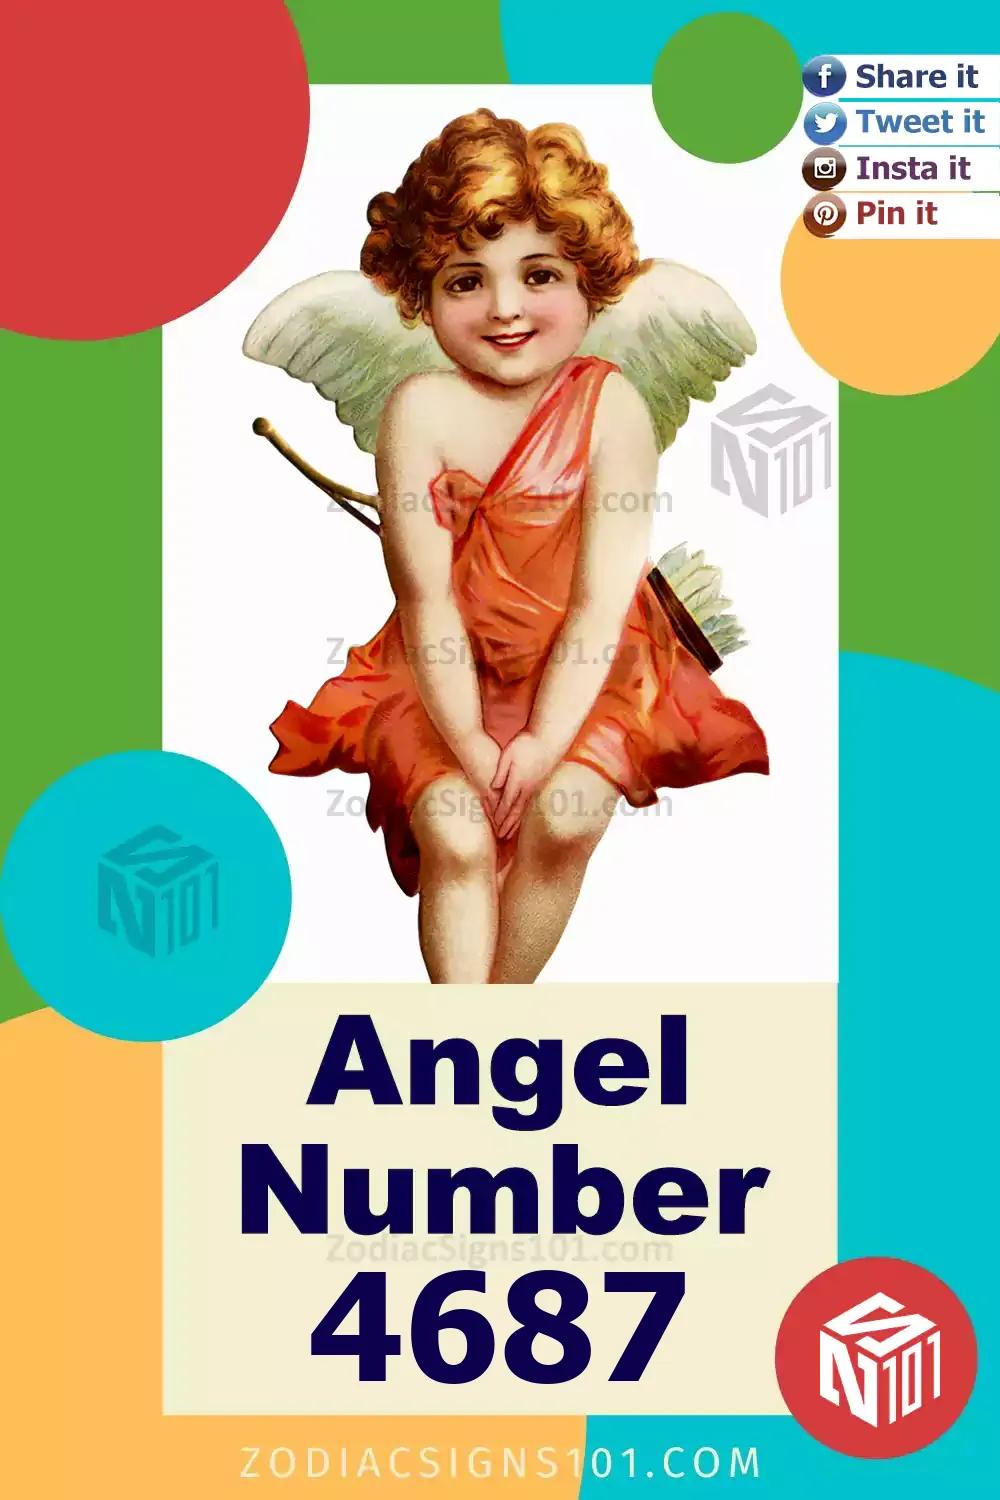 4687-Angel-Number-Meaning.jpg